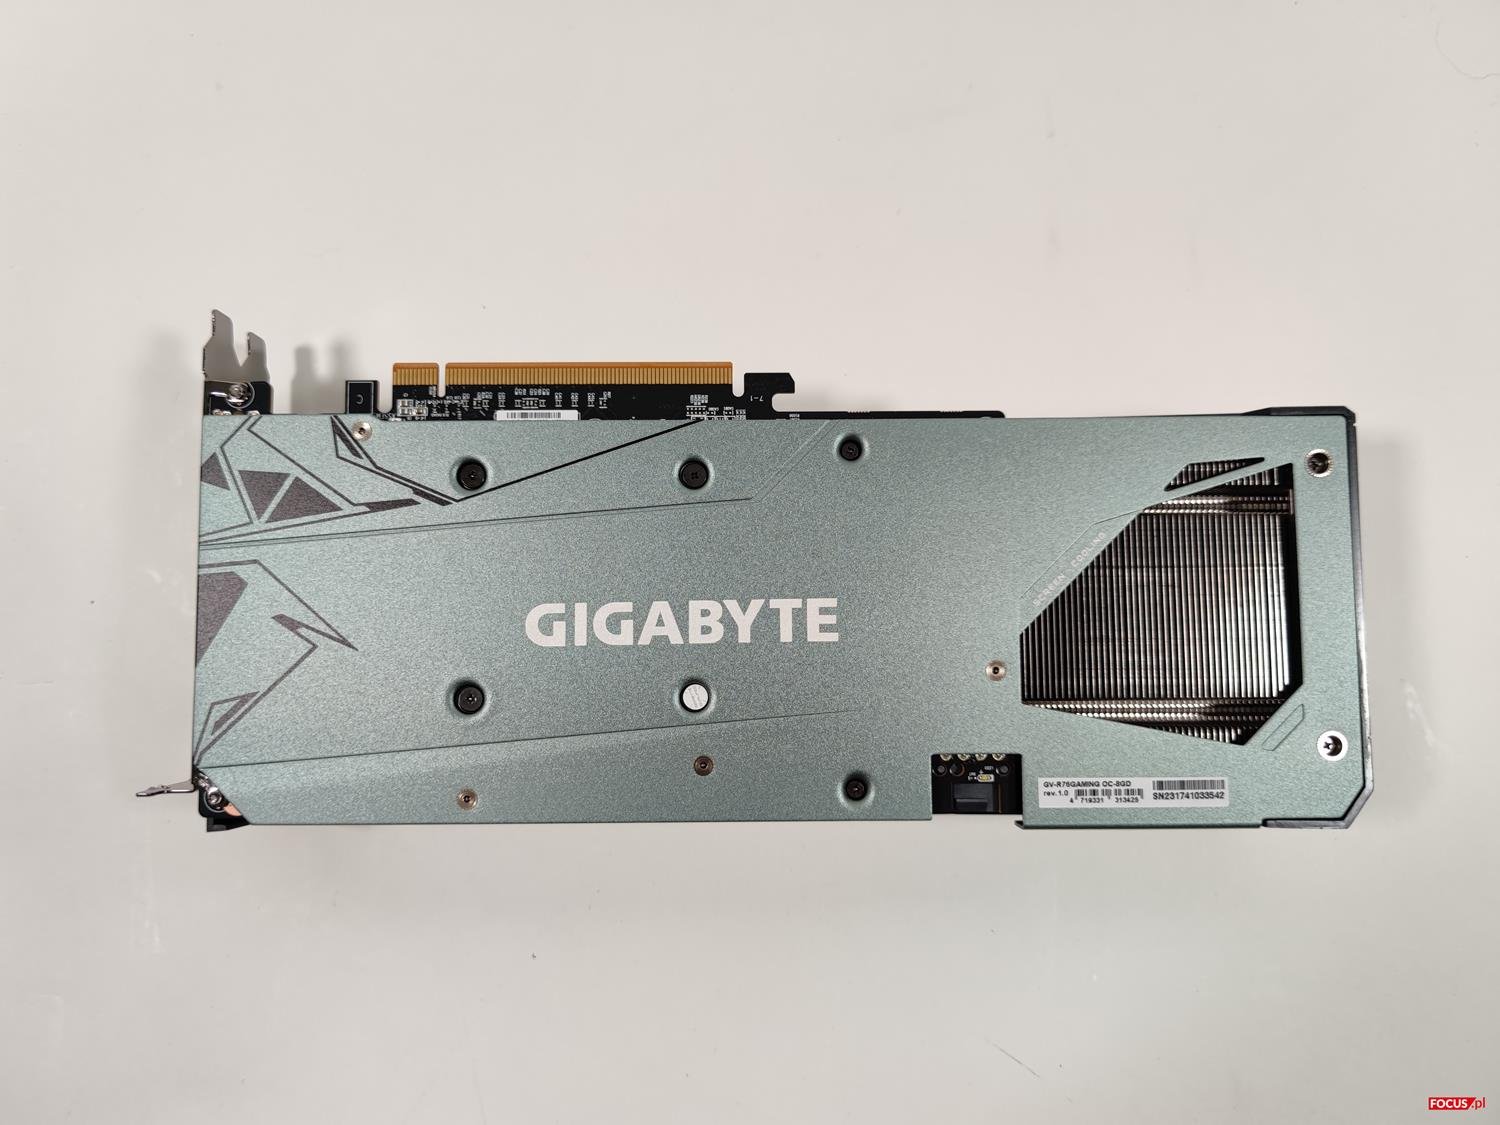 test Gigabyte Radeon RX 7600 Gaming OC, recenzja Gigabyte Radeon RX 7600 Gaming OC, opinia Gigabyte Radeon RX 7600 Gaming OC